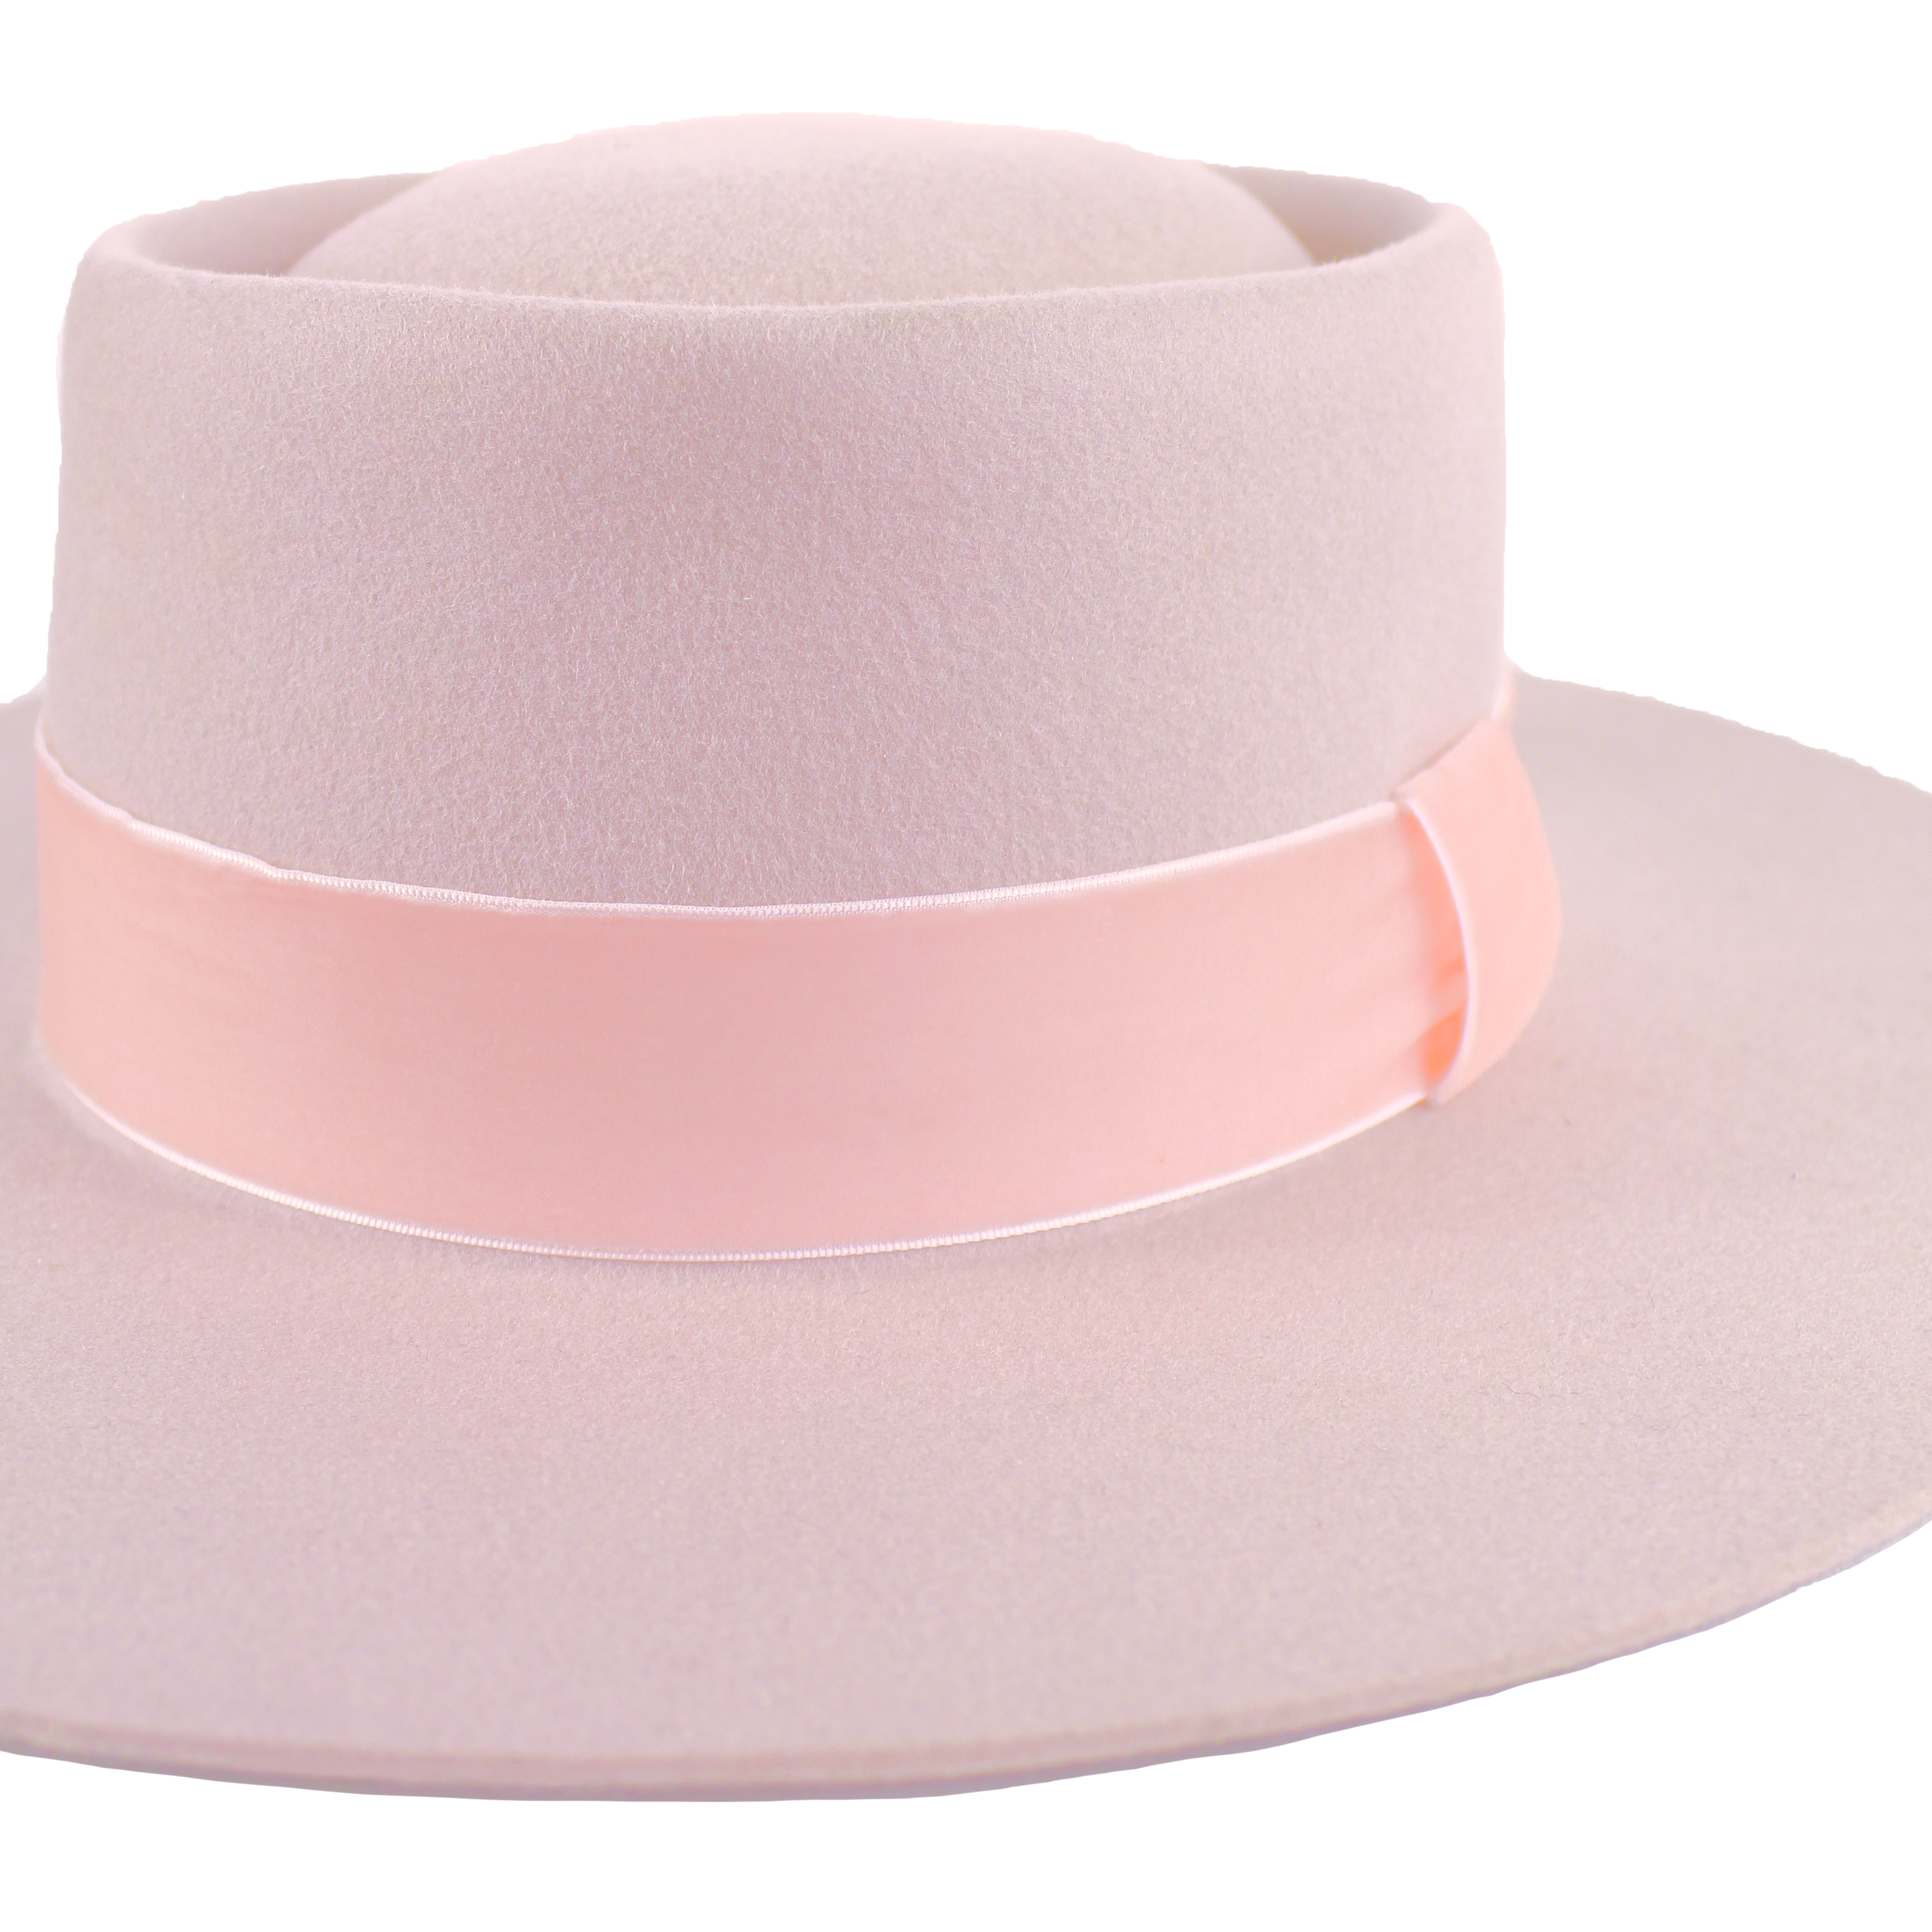 Kayo Boater Hat - Blush